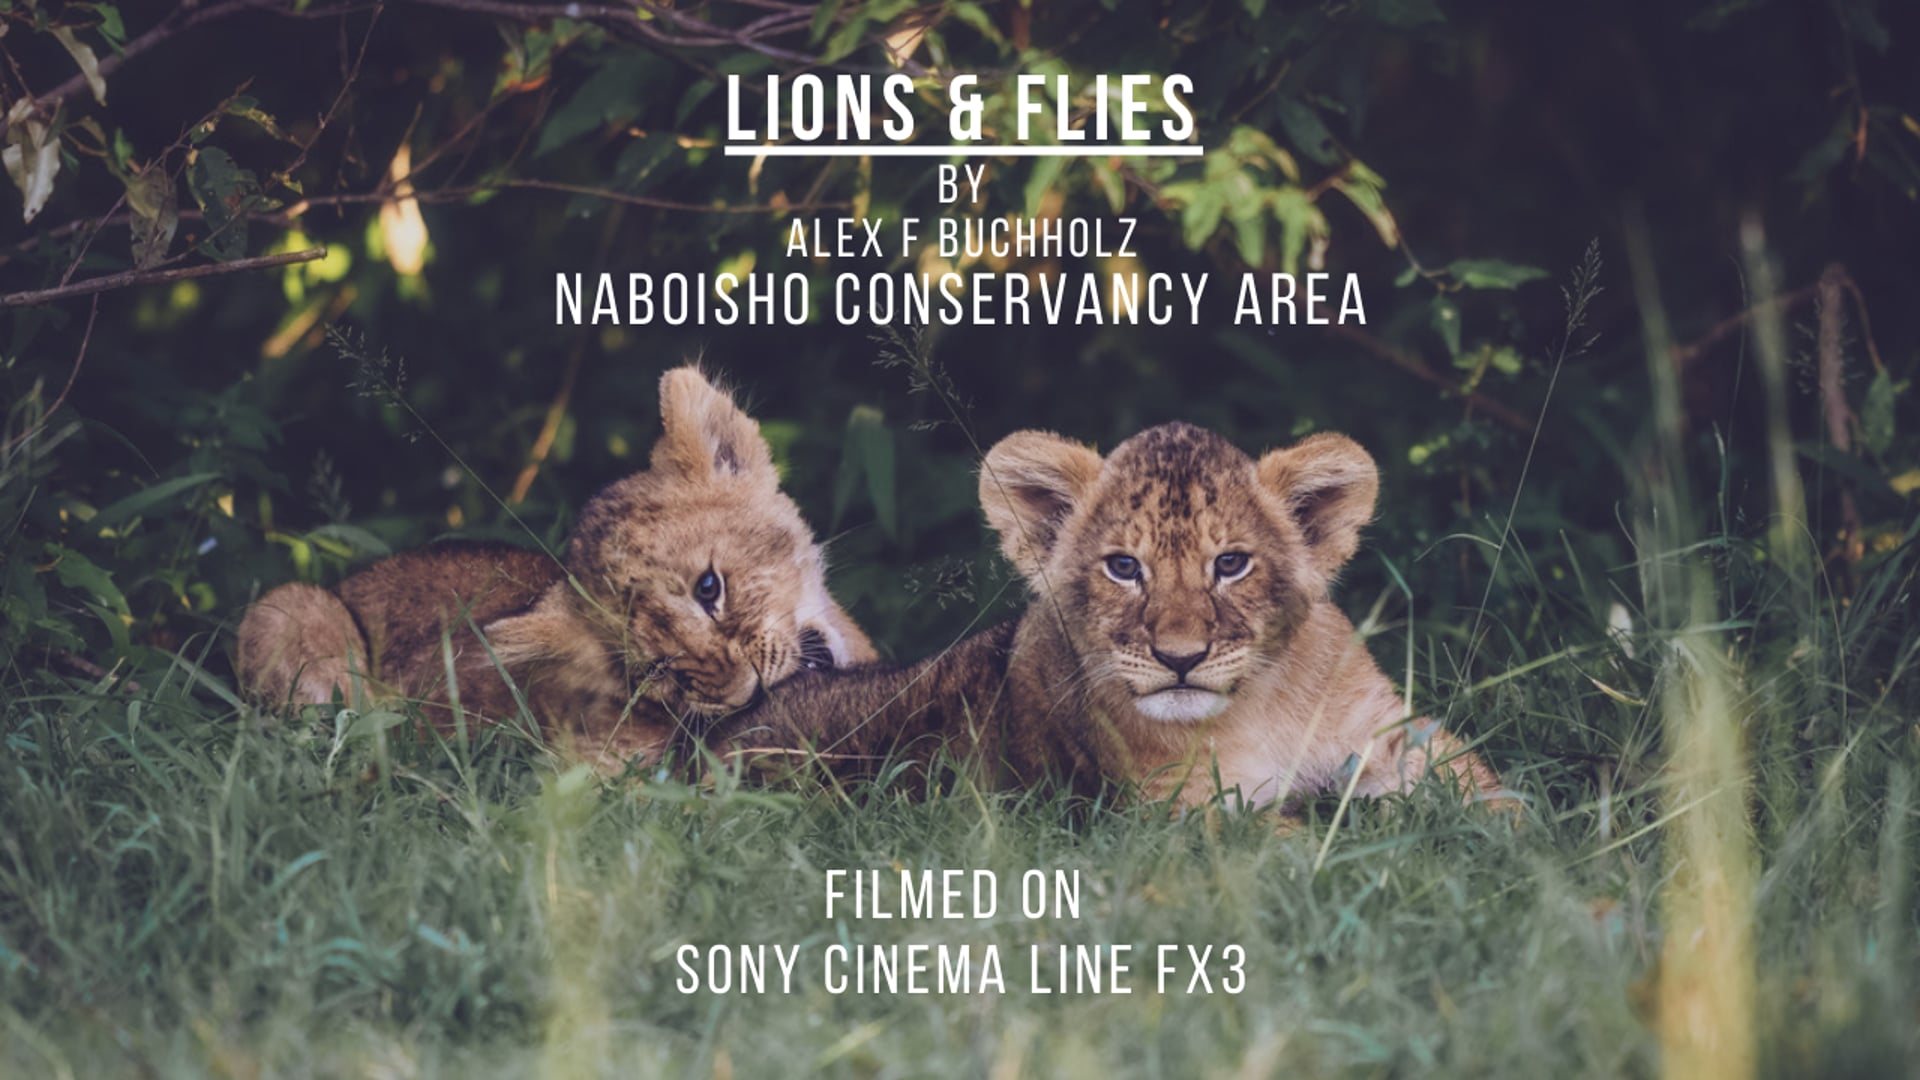 Lions & Flies | Filmed on a Sony Cinema Line FX3 in the Naboisho Conservancy Area (Maasai Mara)